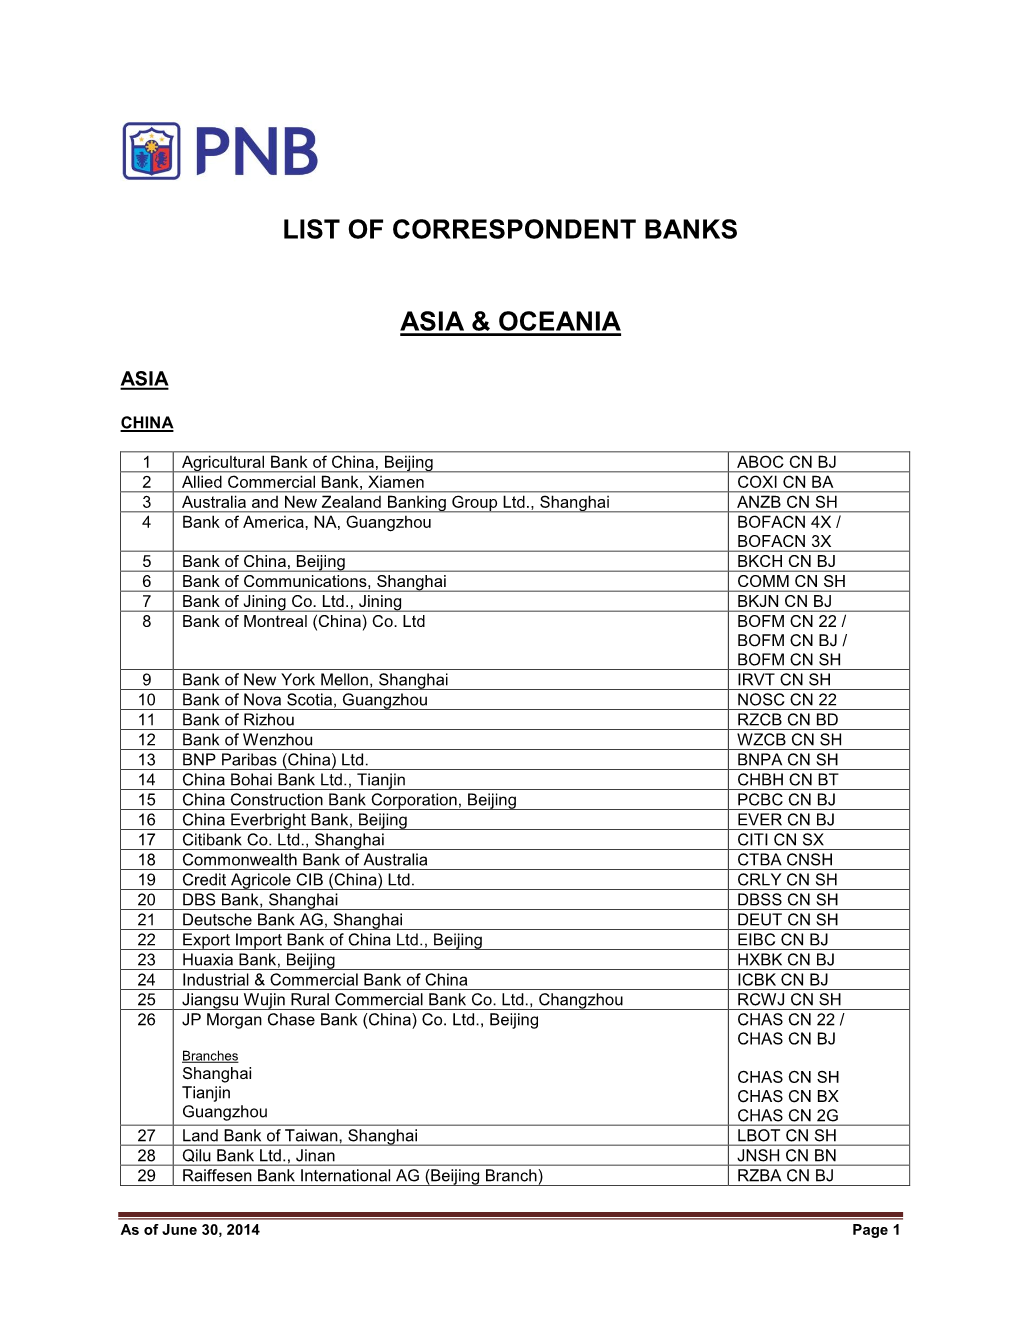 List of Correspondent Banks Asia & Oceania